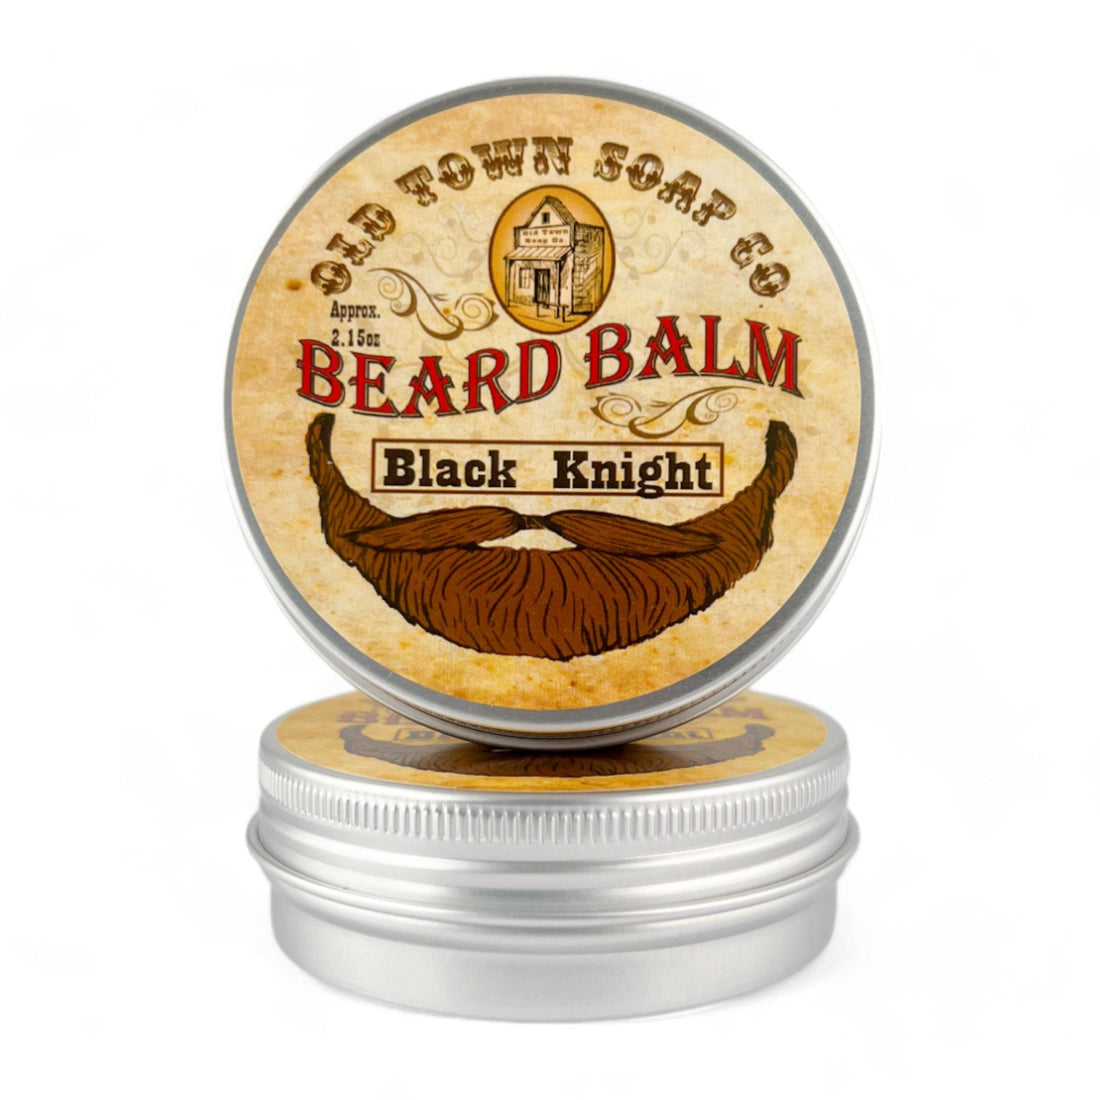 Black Knight Beard Balm - Old Town Soap Co.